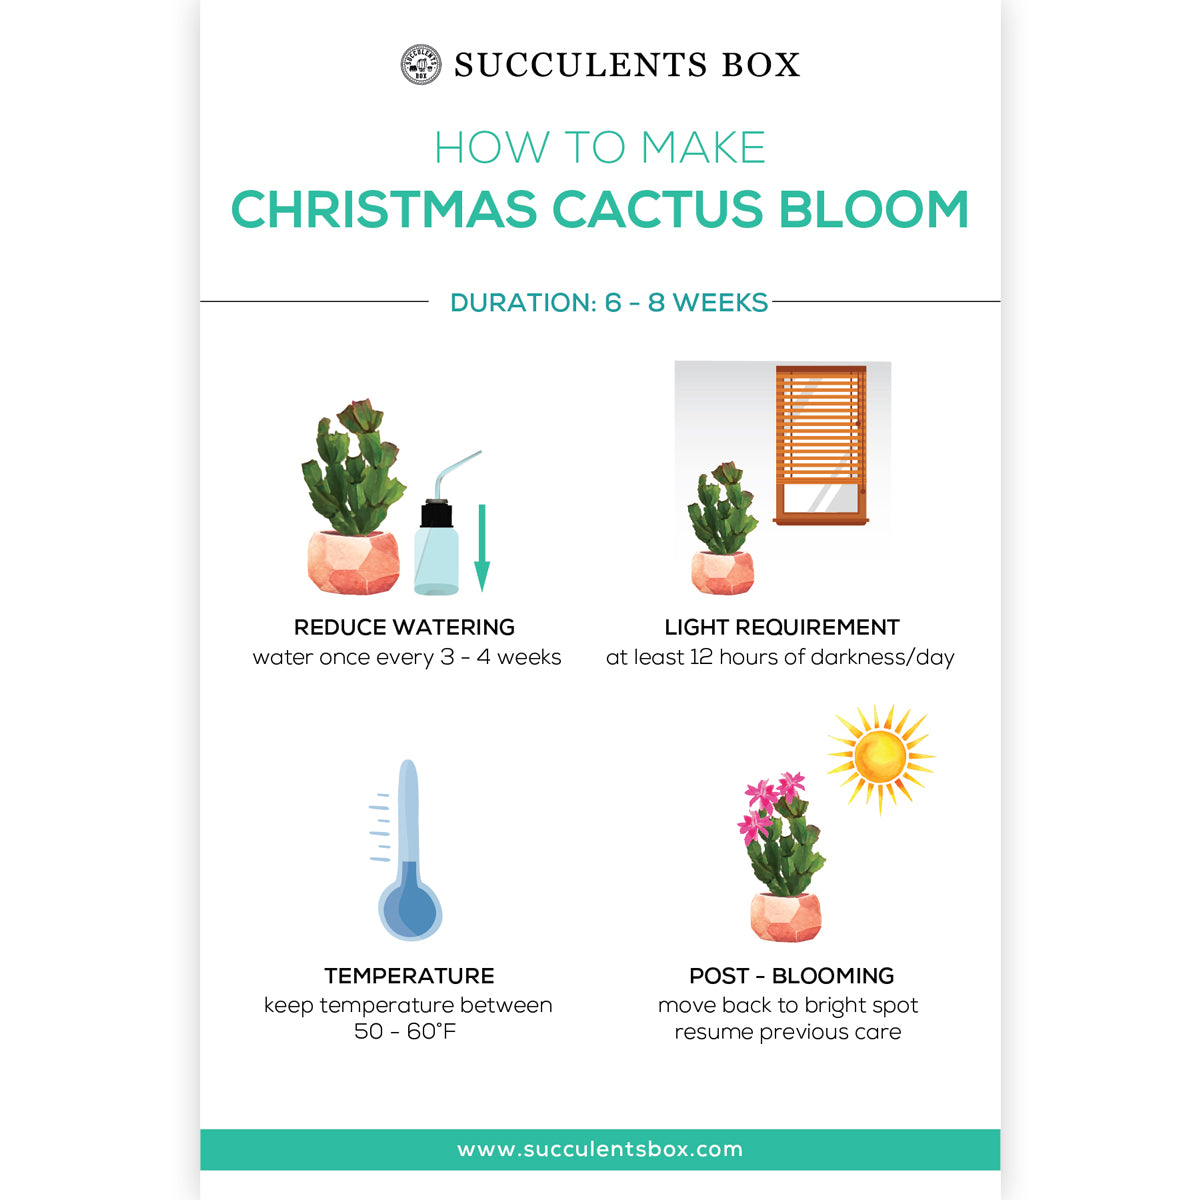 How to Make Christmas Cactus Bloom, Christmas Cactus Care Card for sale, How to care for Christmas Cactus Succulent, Succulent Infographic for sale online